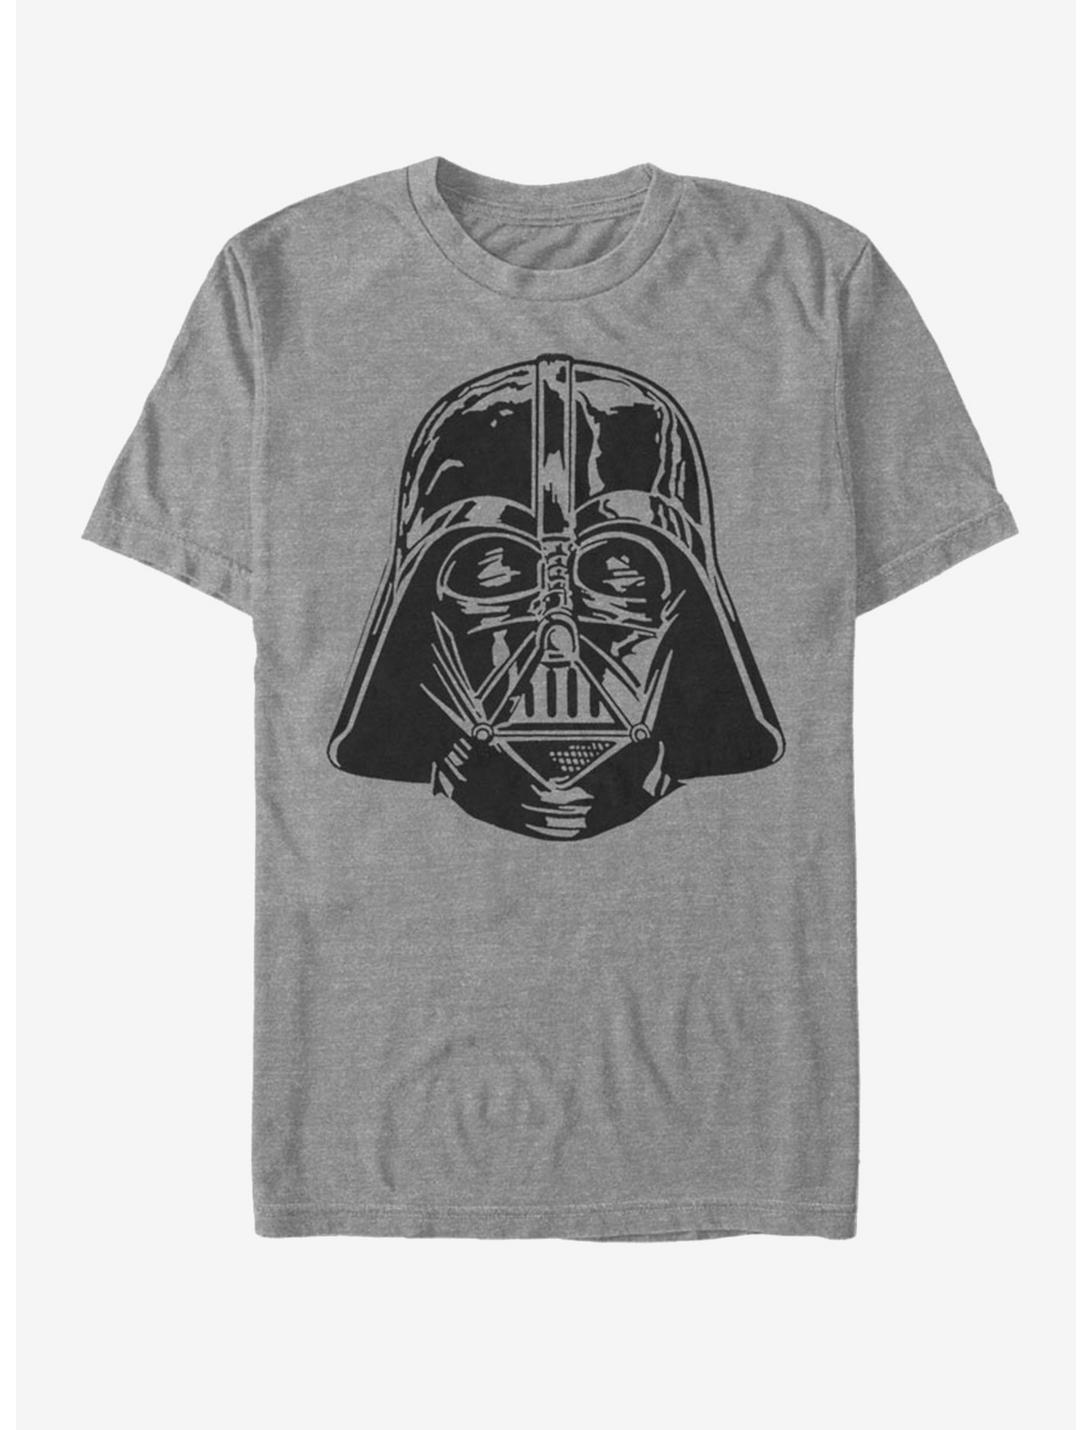 Star Wars Darth Vader Face T-Shirt, , hi-res